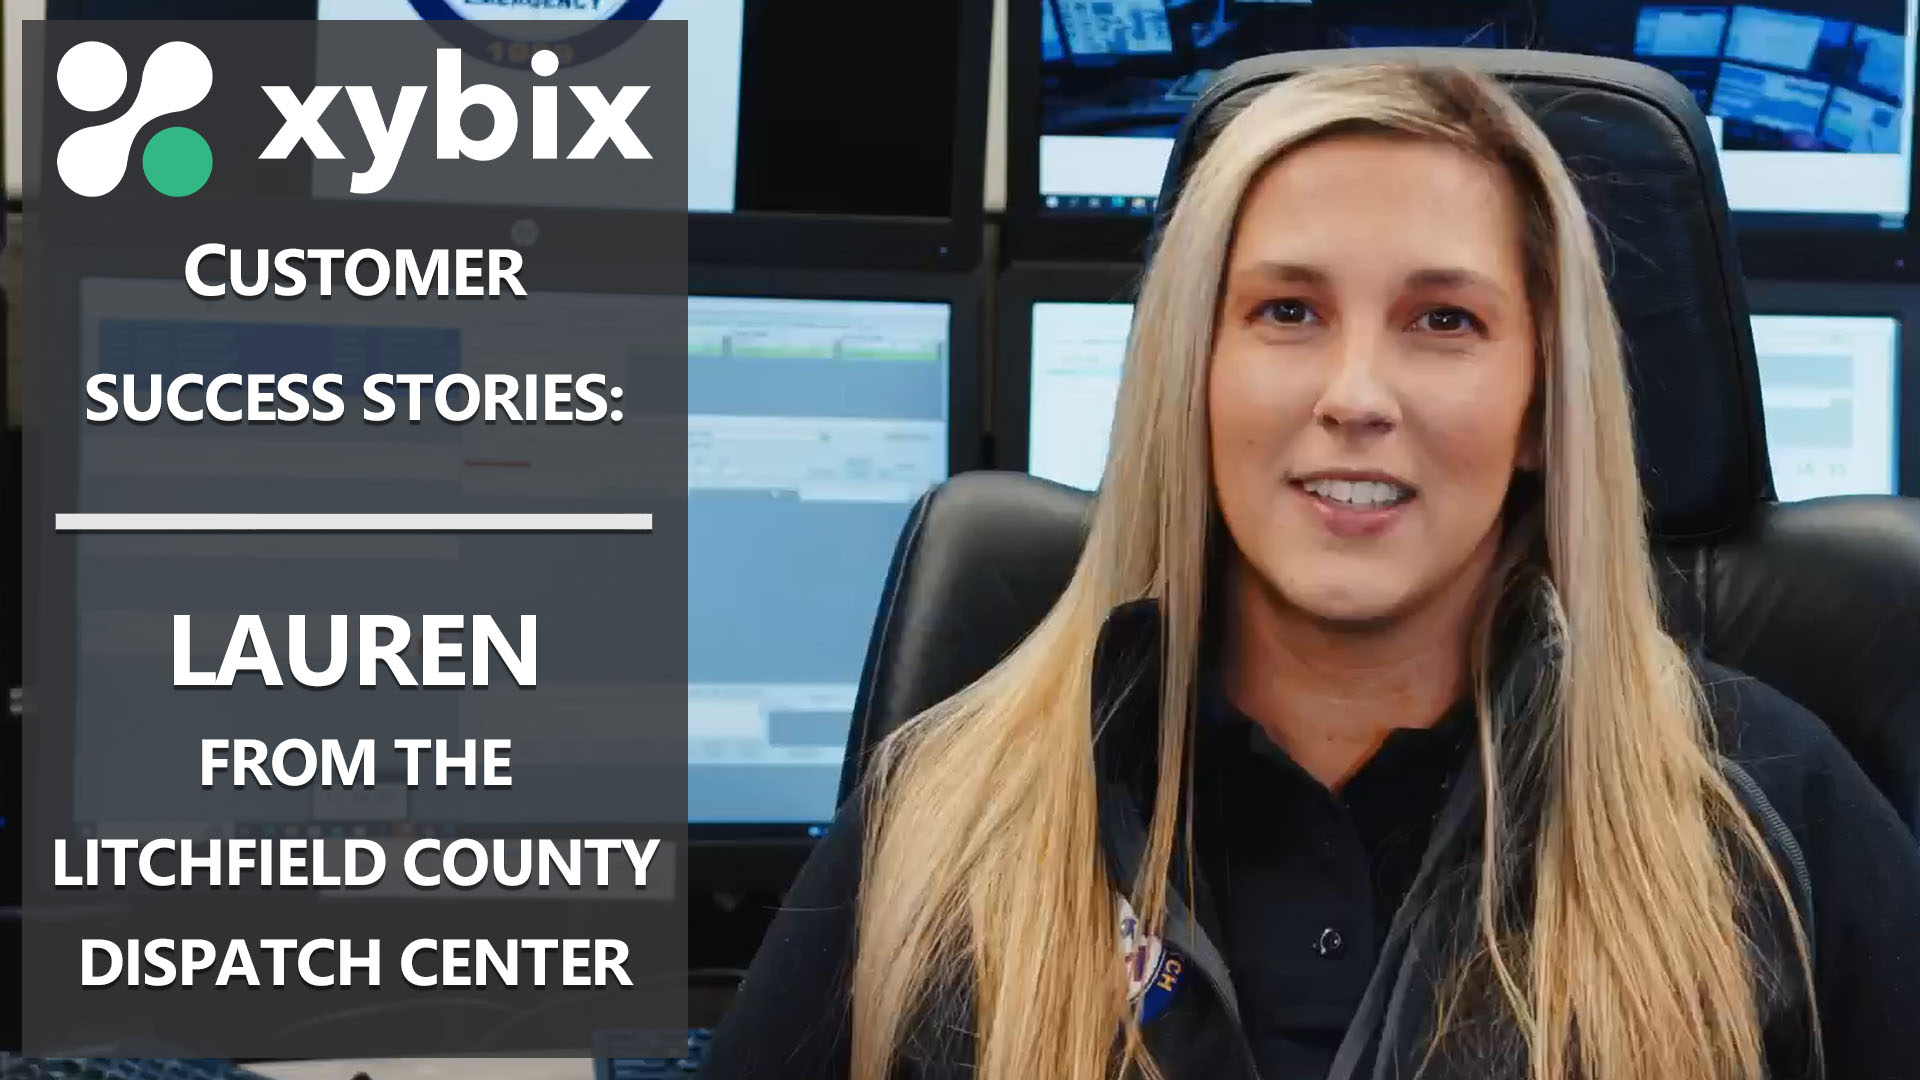 Xybix Testimonials - Lauren from the Litchfield County Dispatch Center in Connecticut